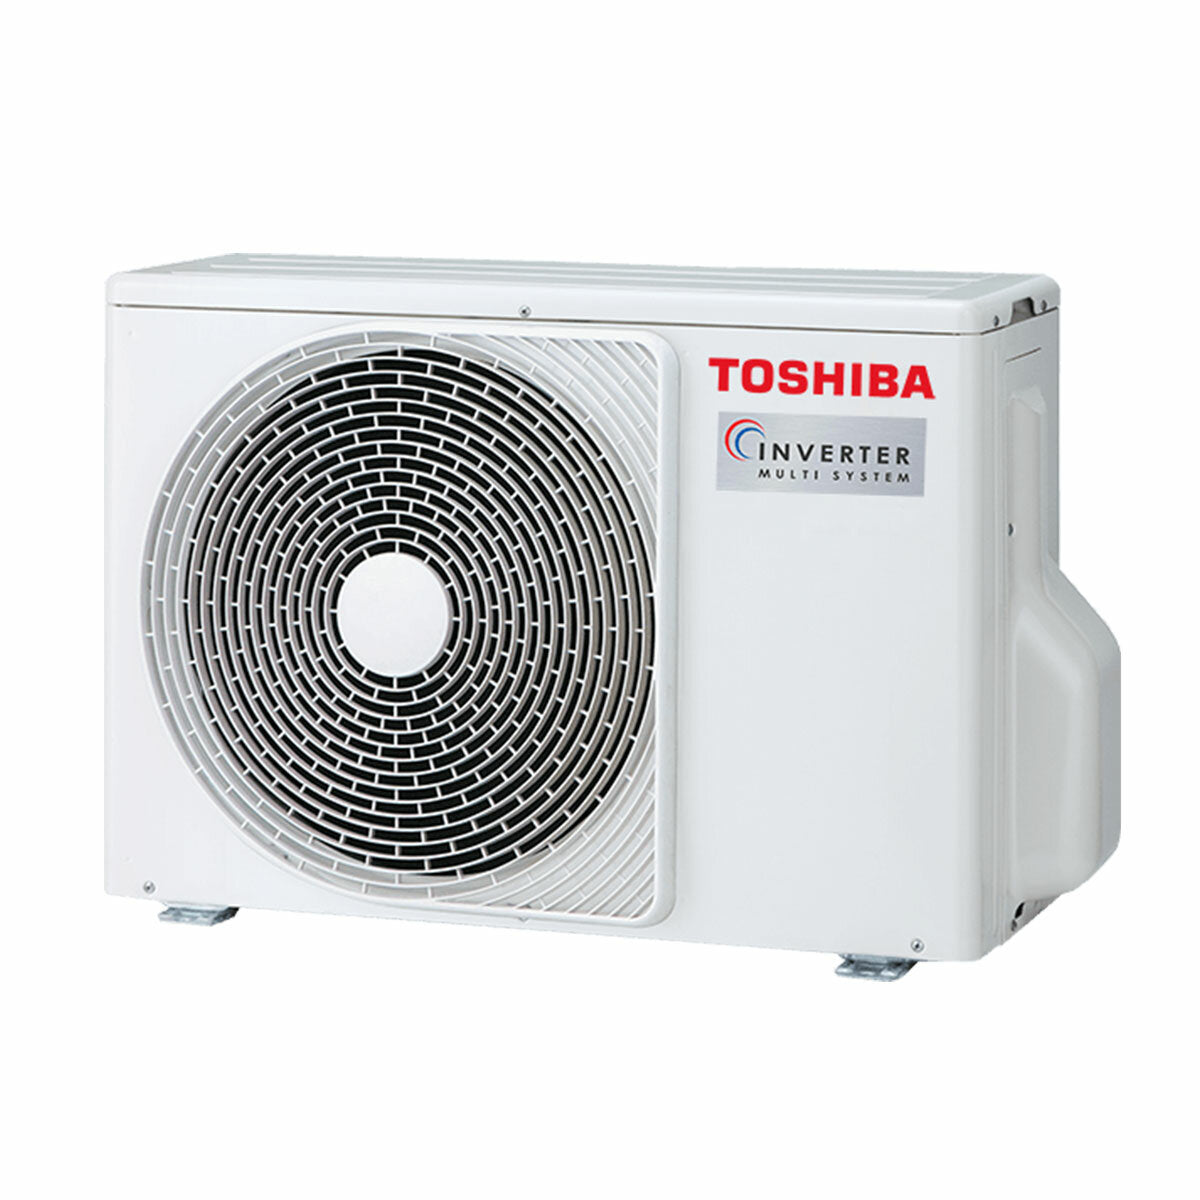 Toshiba ducted air conditioner U2 trial split 7000+7000+22000 BTU inverter A+++ external unit 7 kW